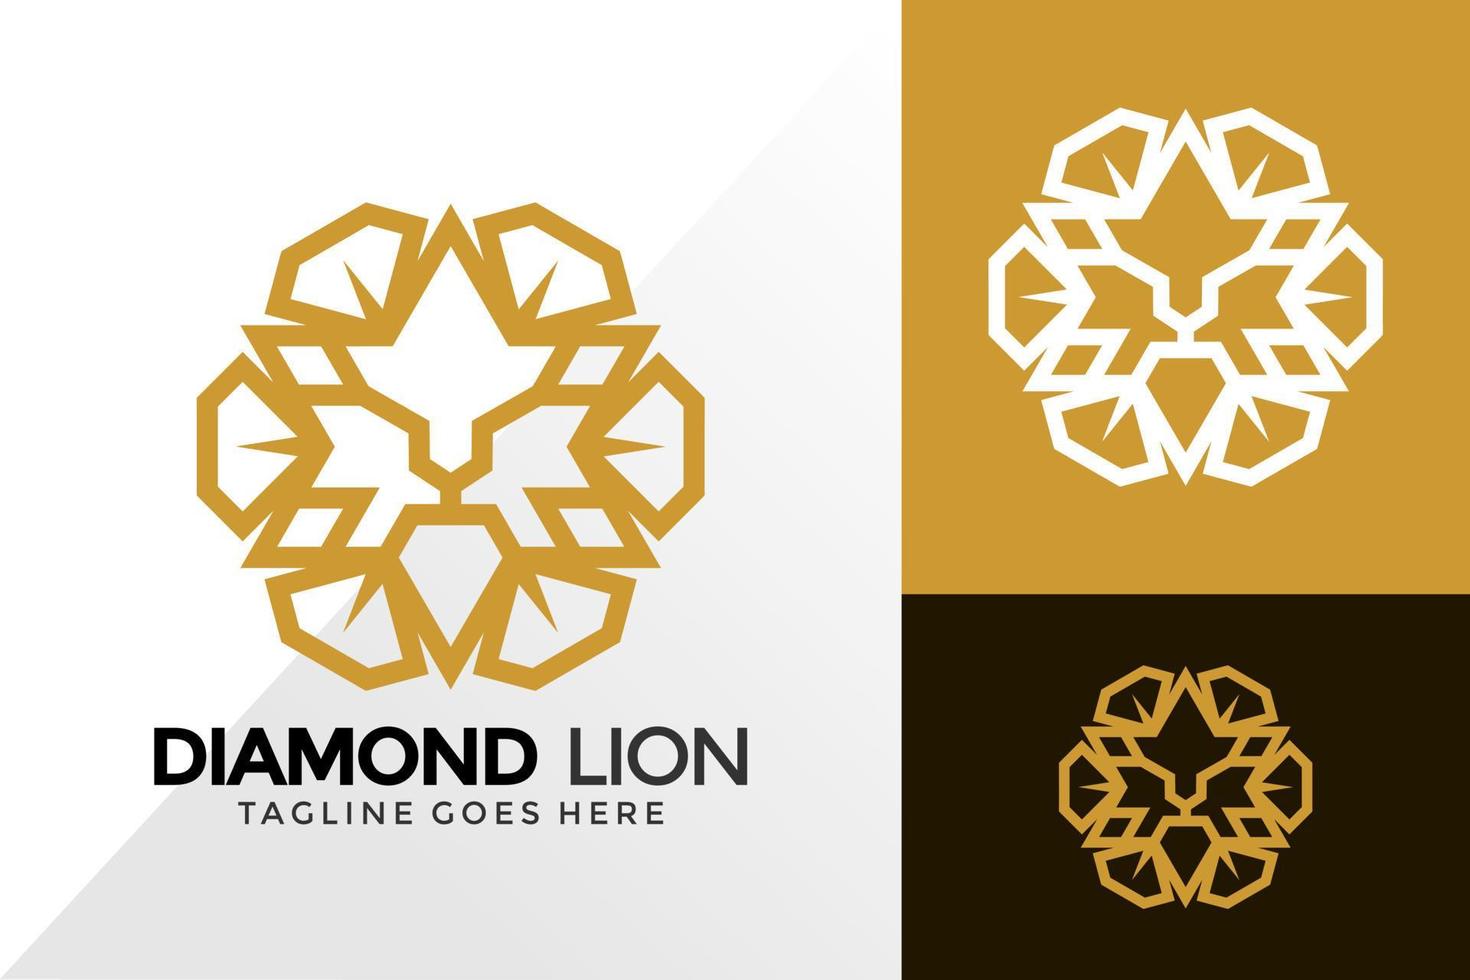 Diamond Lion Star Logo Design, Brand Identity Logos Designs Vector Illustration Template